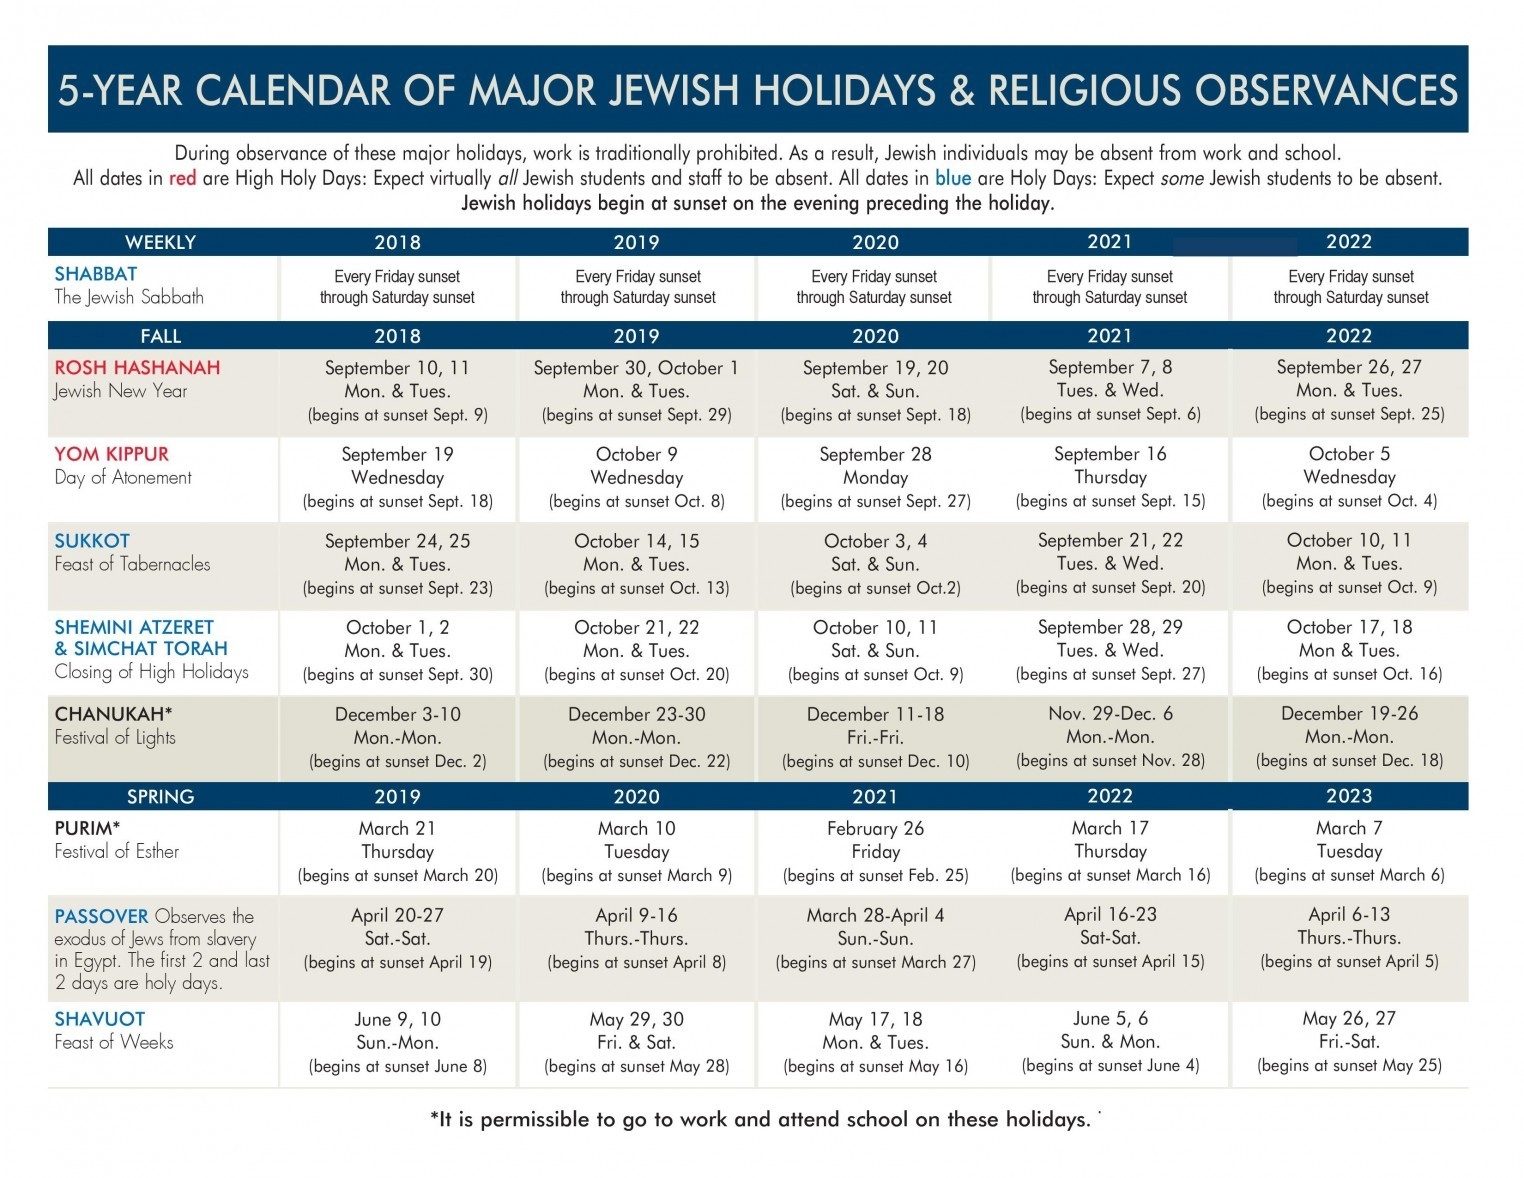 5-Year Jewish Holiday Calendar | Jewish Federation Of-Jewish Holidays October 2020